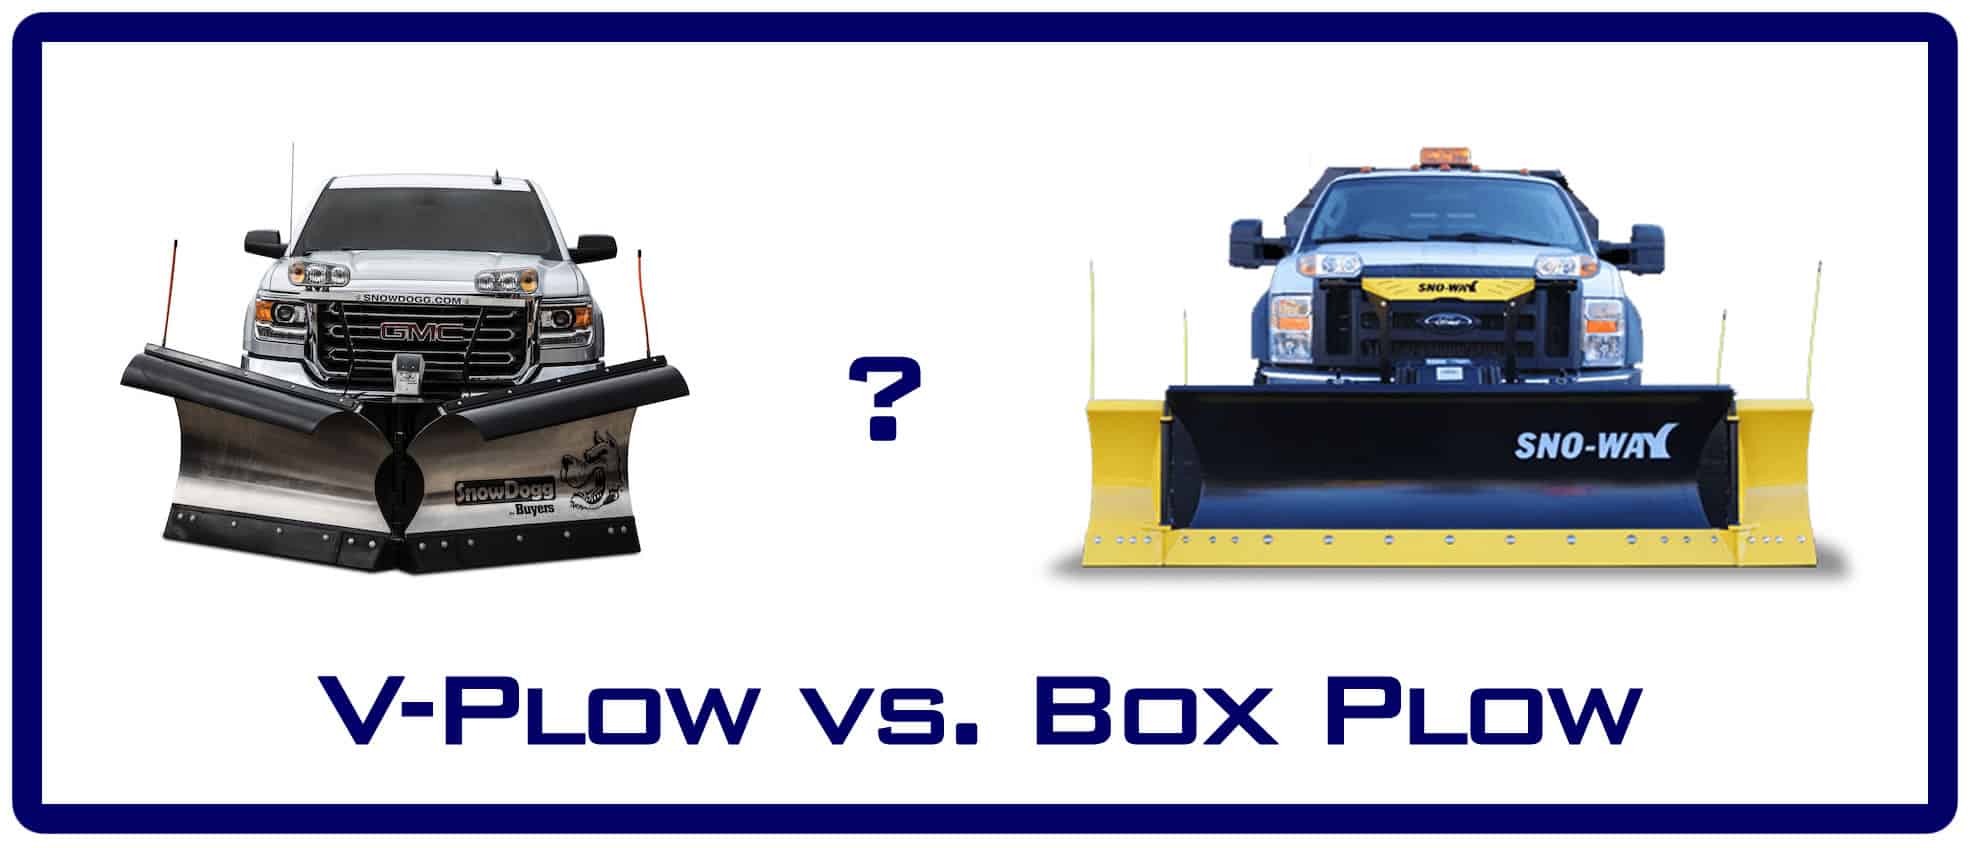 Snowplow Poll: V-Plow vs Expandable Box Plow